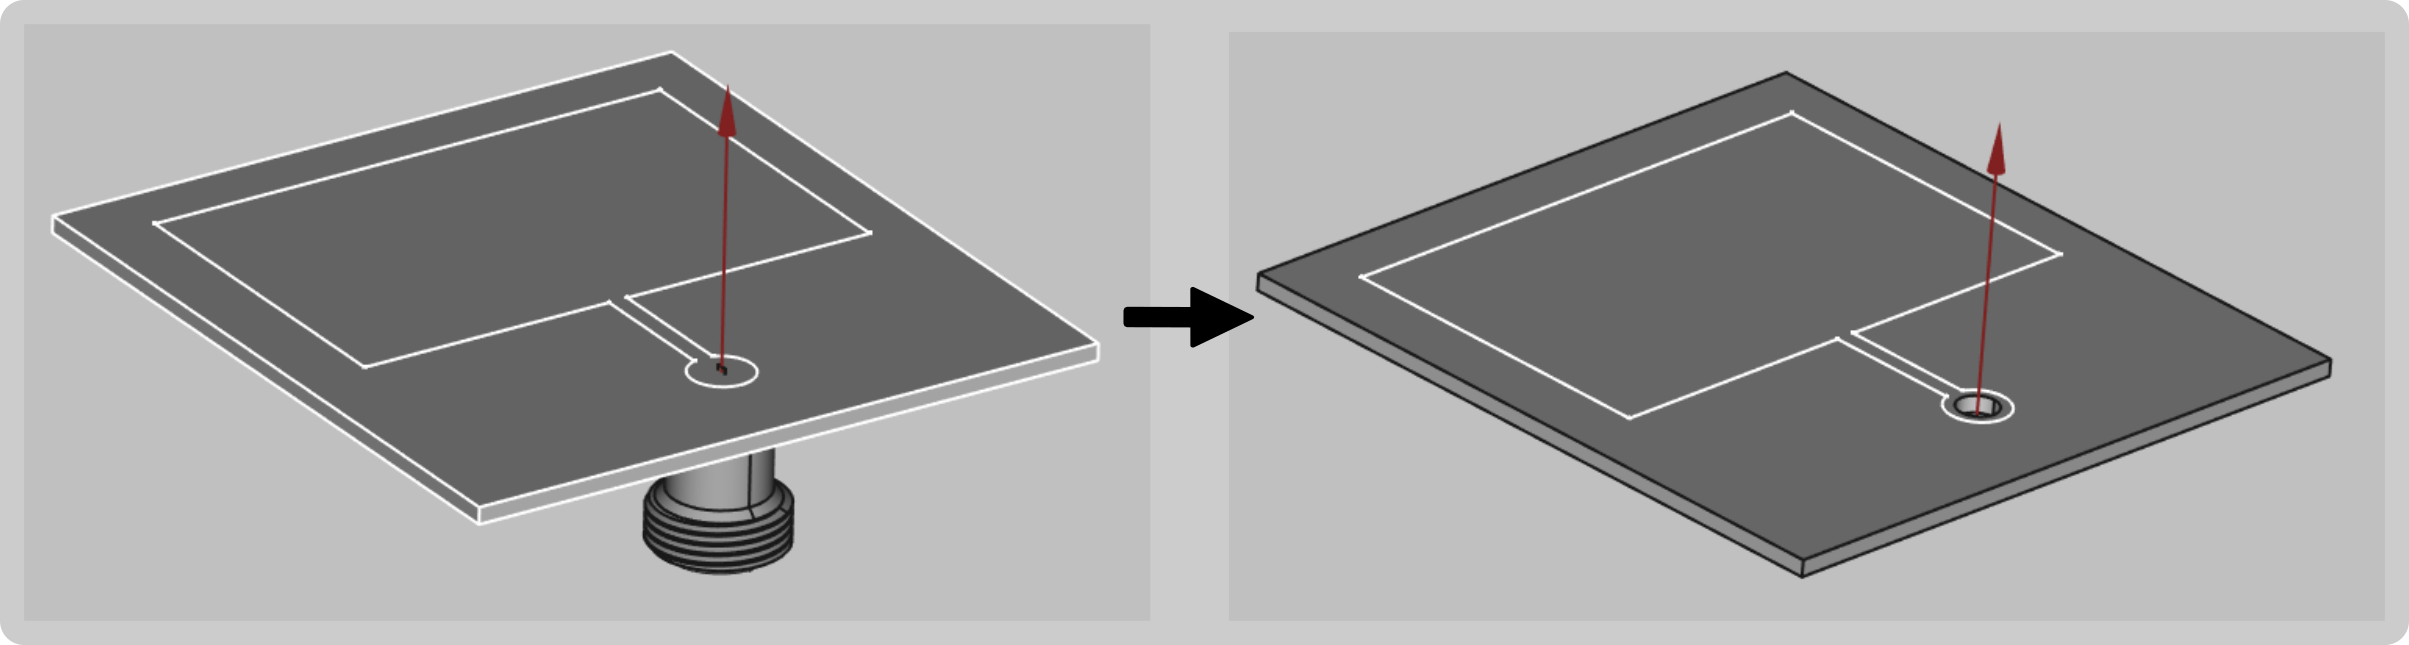 Coaxial panel connector simplification image